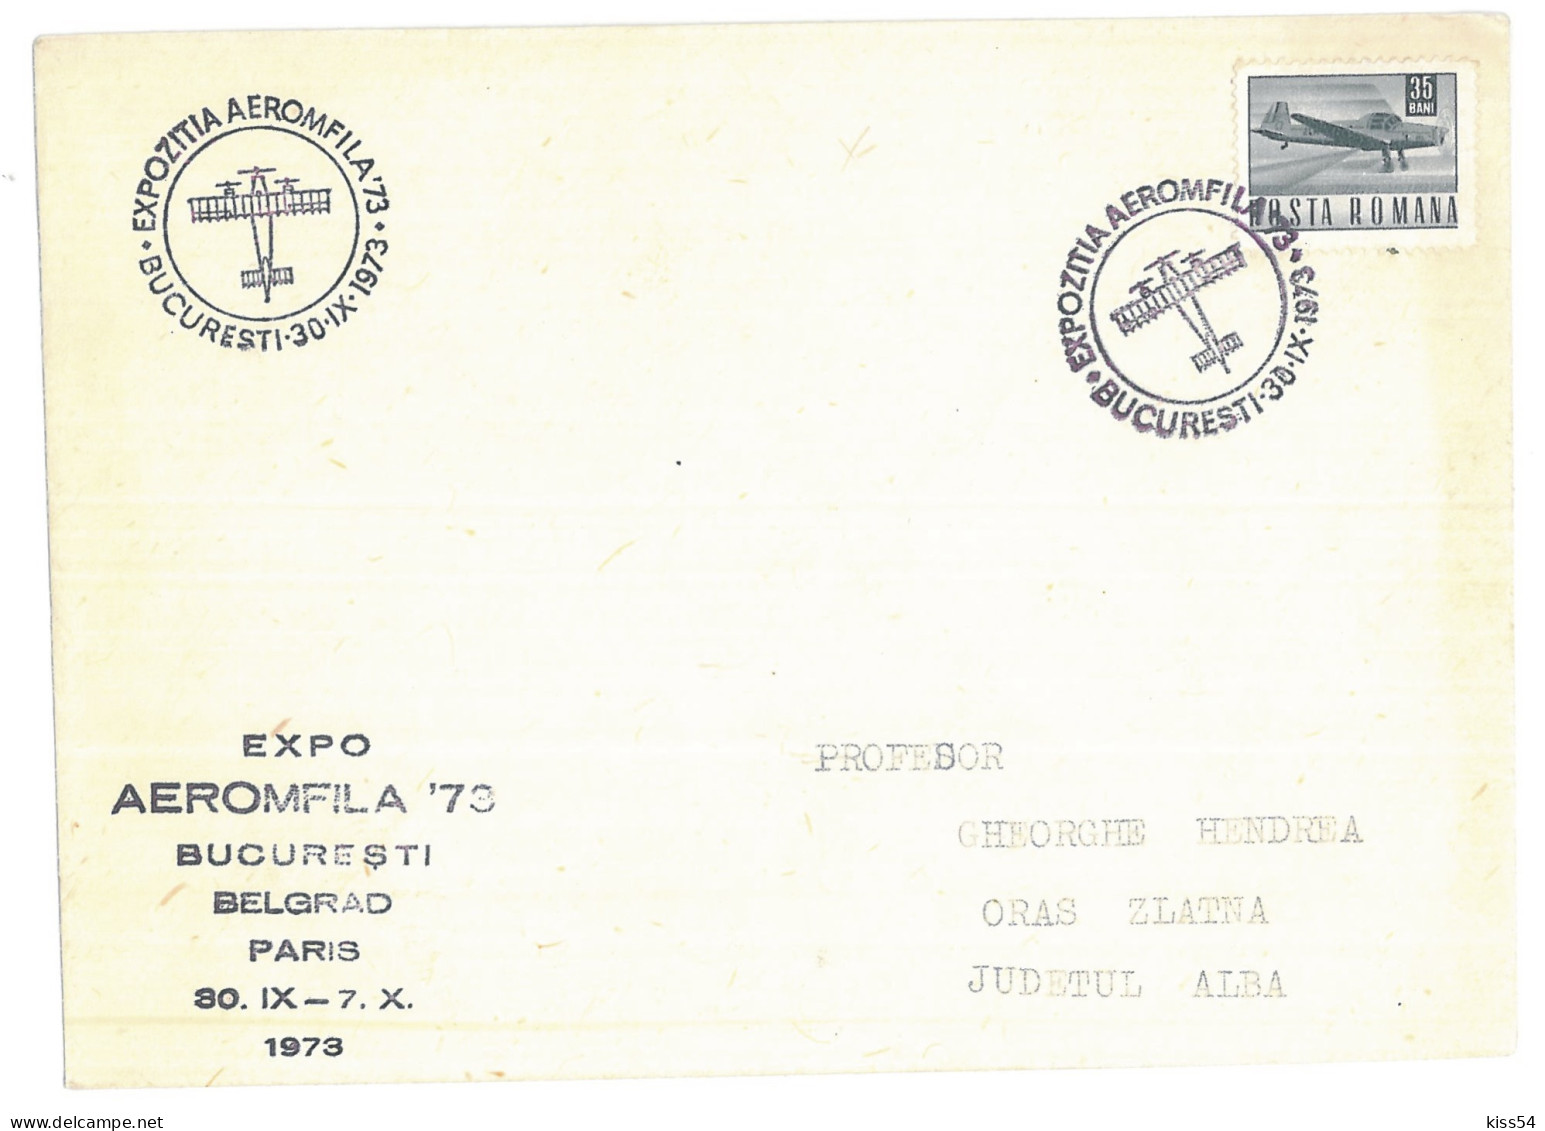 COV 24 - 209 AIRPLANE, Bucuresti, Aeromfila, Romania - Cover - Used - 1973 - Briefe U. Dokumente